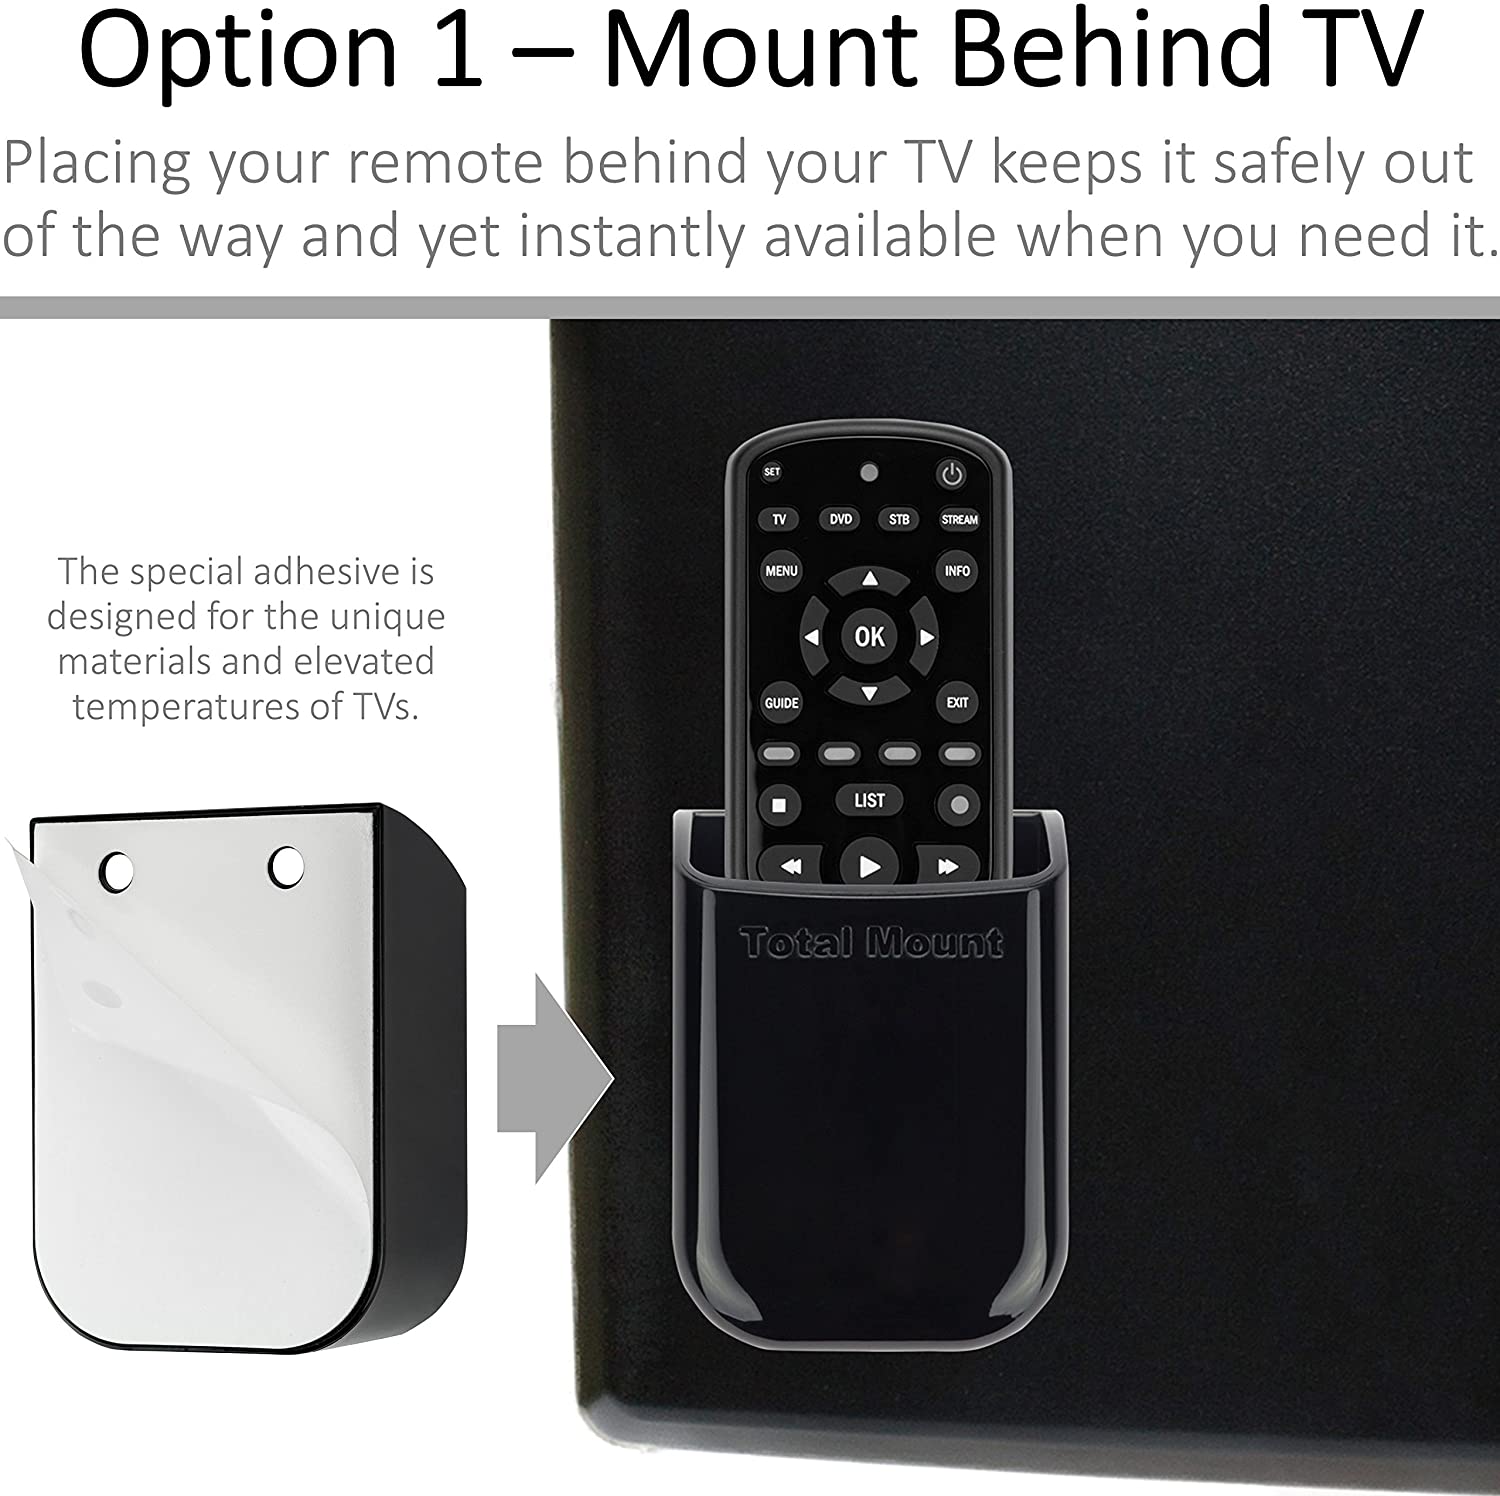 TotalMount Universal Remote Holders (Quantity 2 - One Remote per Holder)